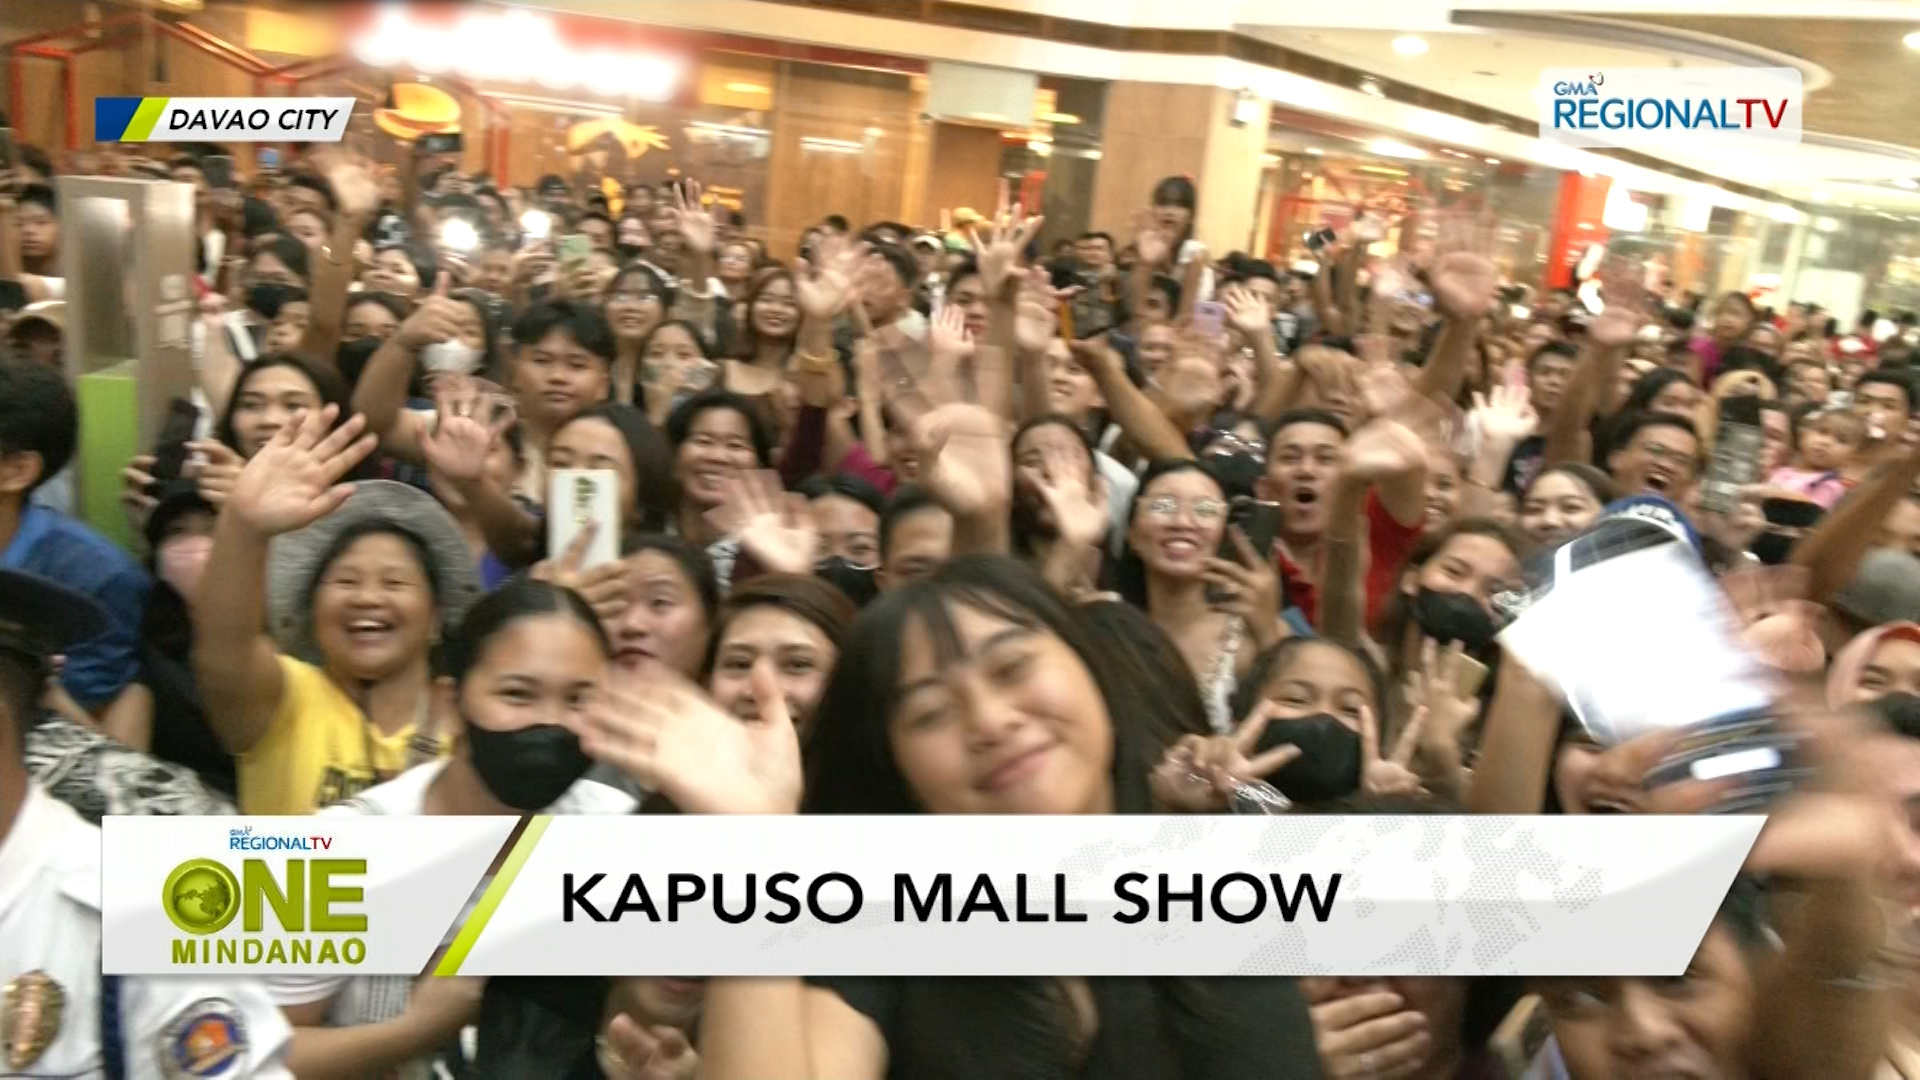 One Mindanao Kapuso Mall Show One Mindanao Gma Regional Tv Online Home Of Philippine